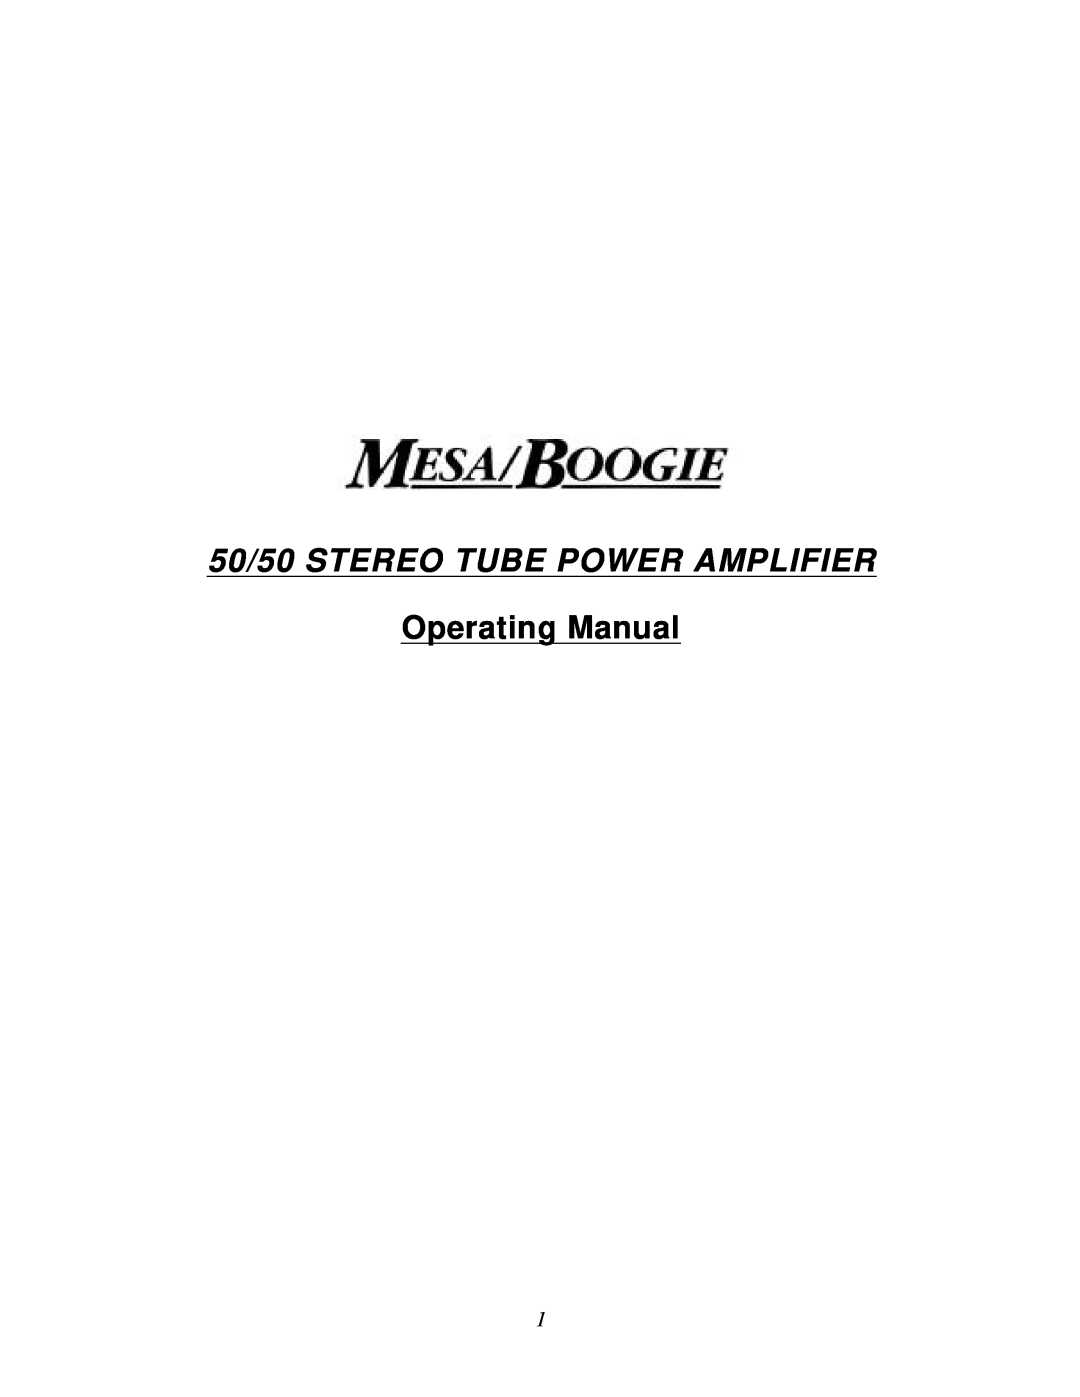 Mesa/Boogie manual 50/50 STEREO TUBE POWER AMPLIFIER, Operating Manual 